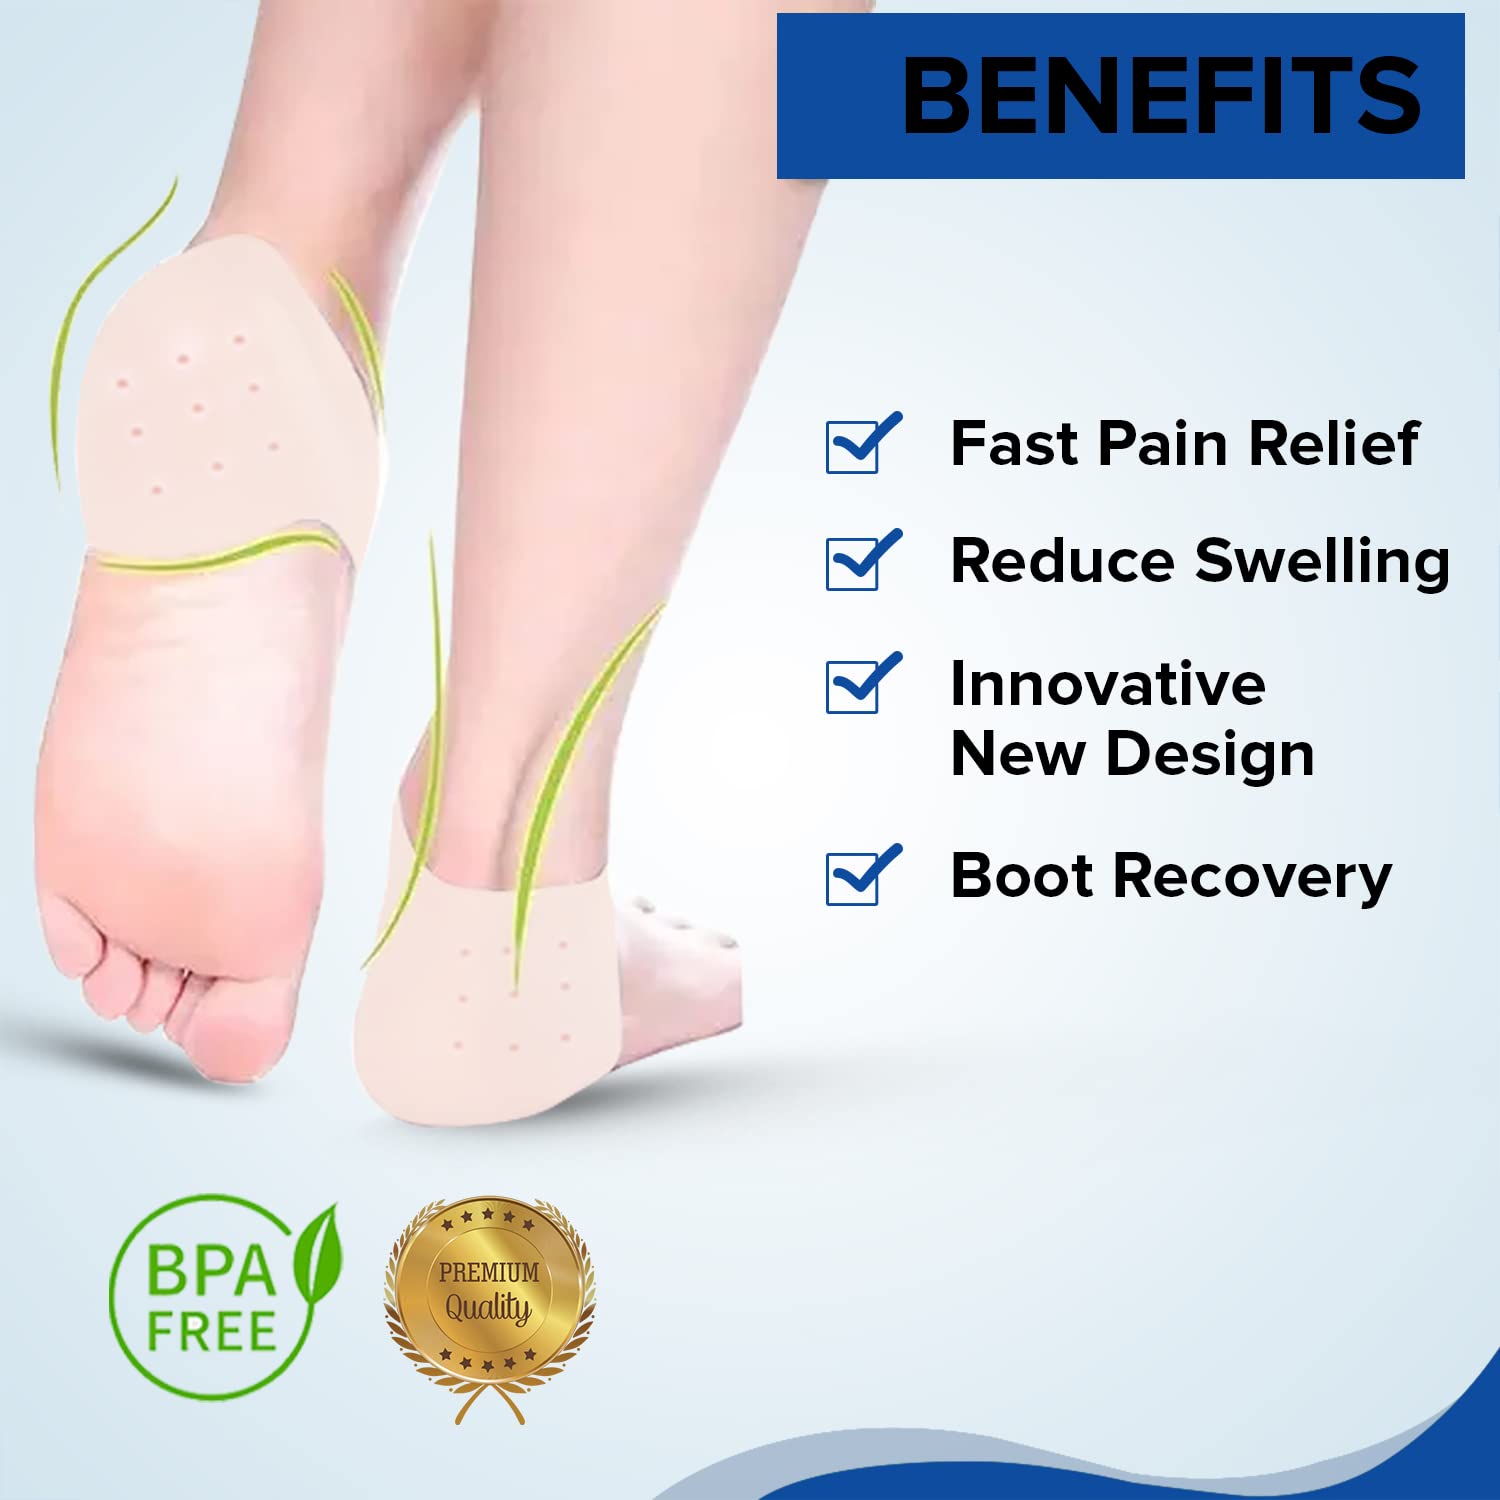 Dr Foot Anti Crack Silicone Gel Heel Pad Socks | For Heel Swelling Pain Relief, Dry Hard, Cracked Heels Repair Cream Foot Care | For Both Men & Women | Half-length - 1 Pair (Free Size) (Pack of 3)